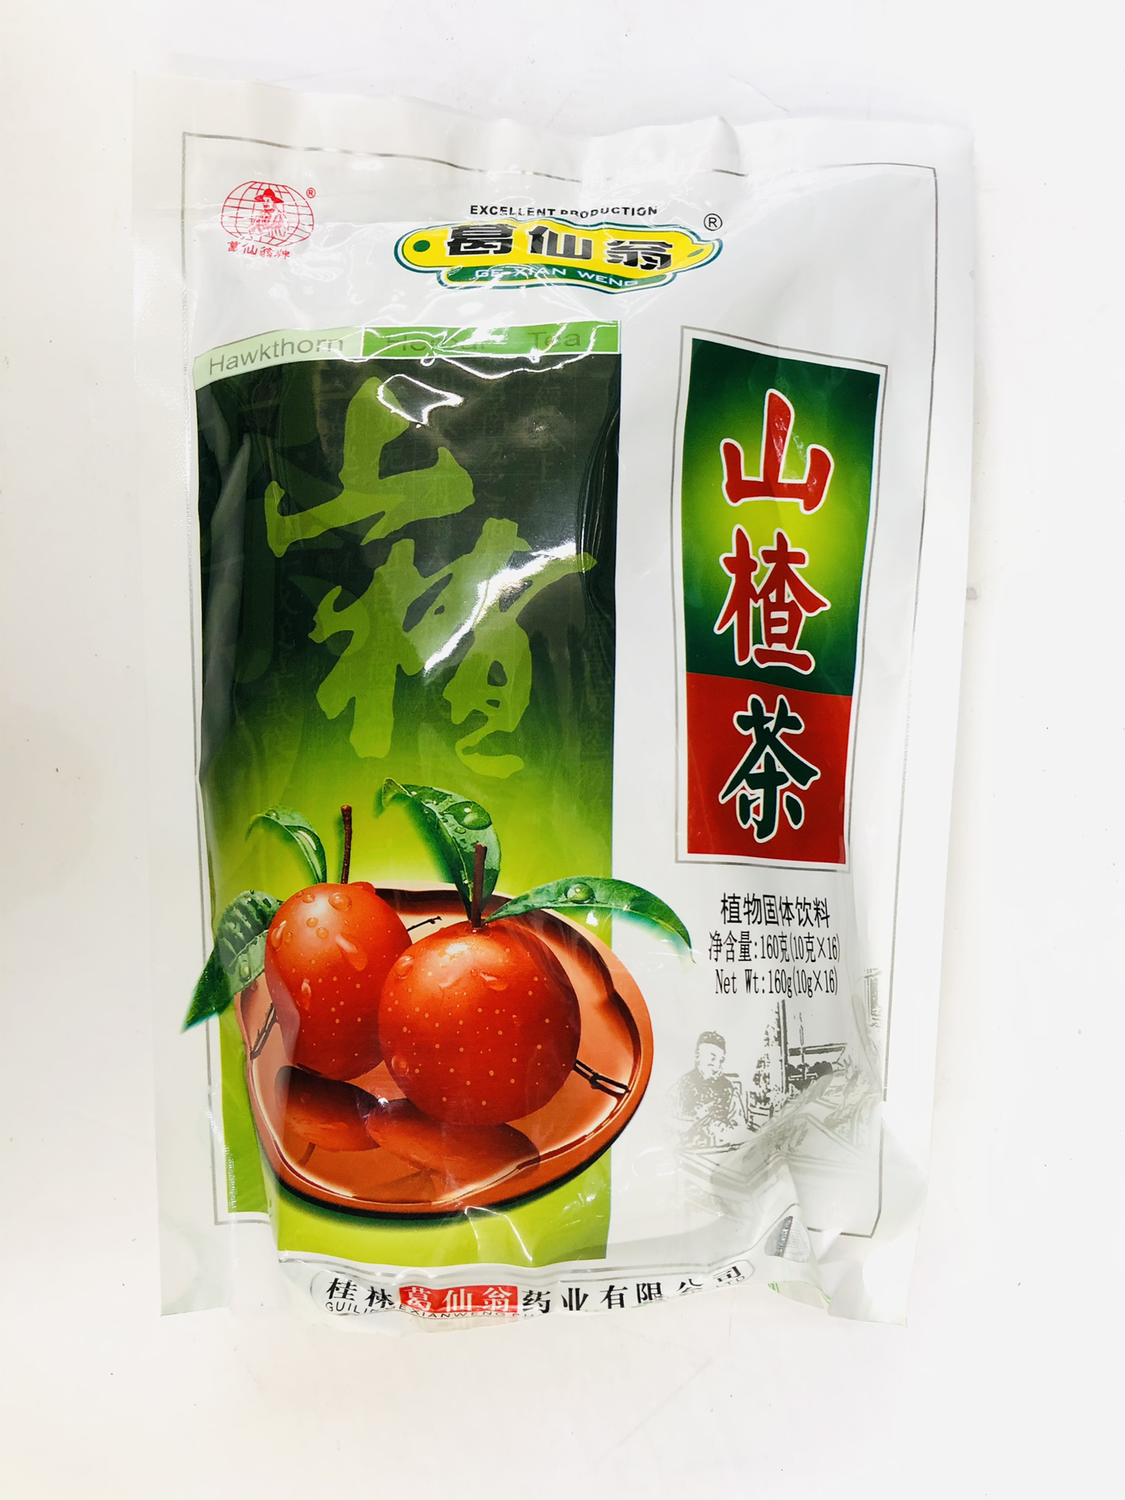 GROC【杂货】葛仙翁 山楂茶 160g(10gX16)